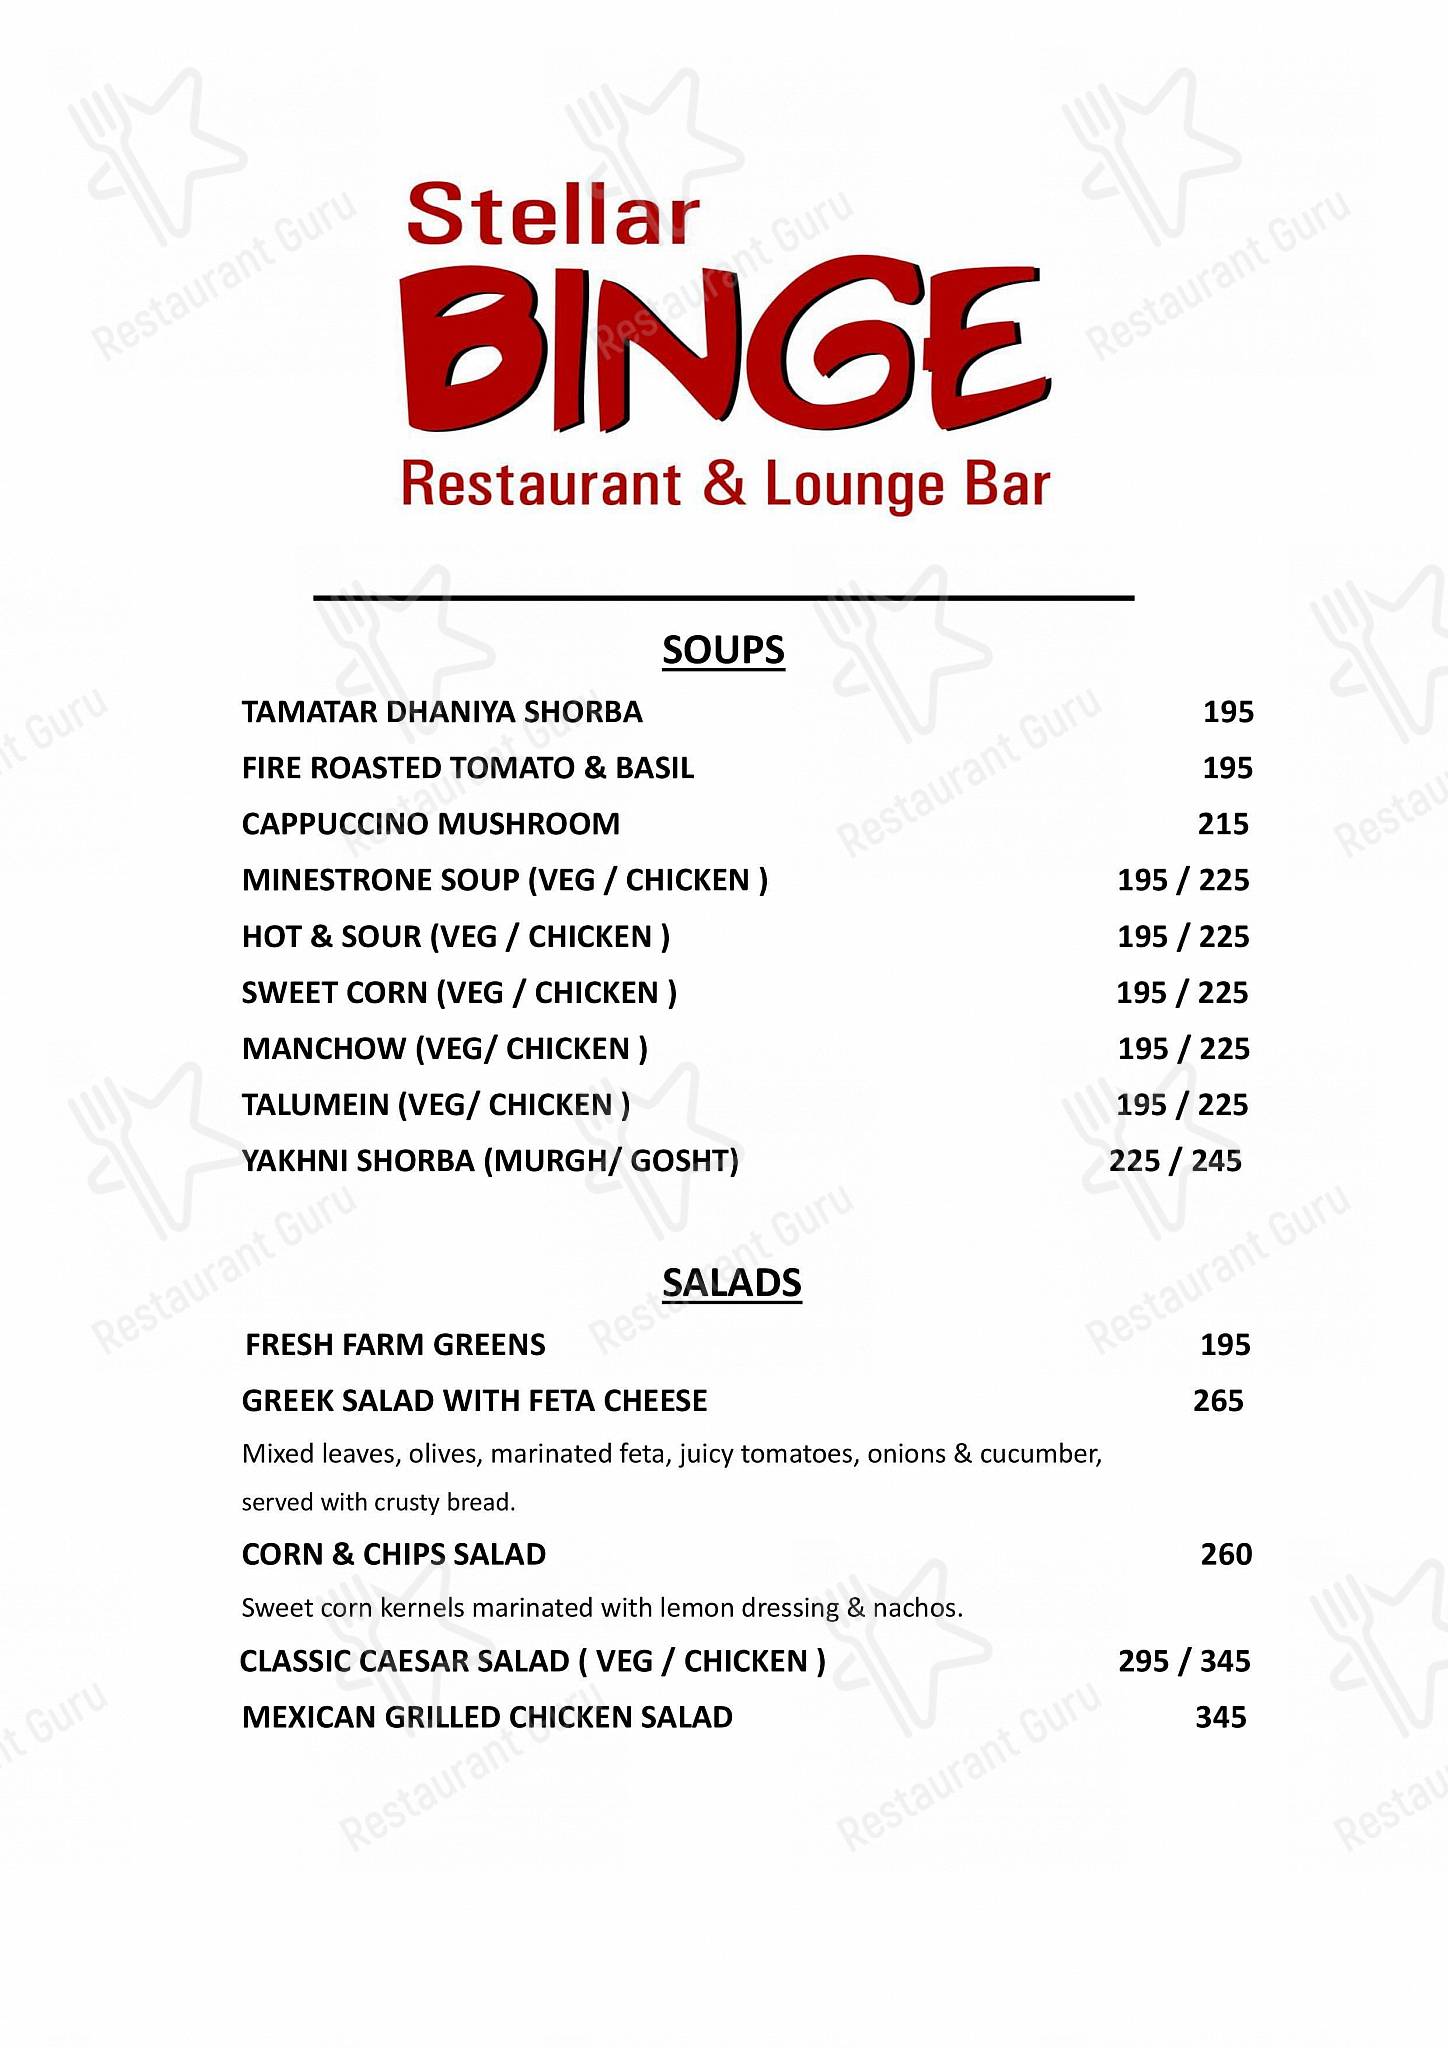 Stellar Binge menu